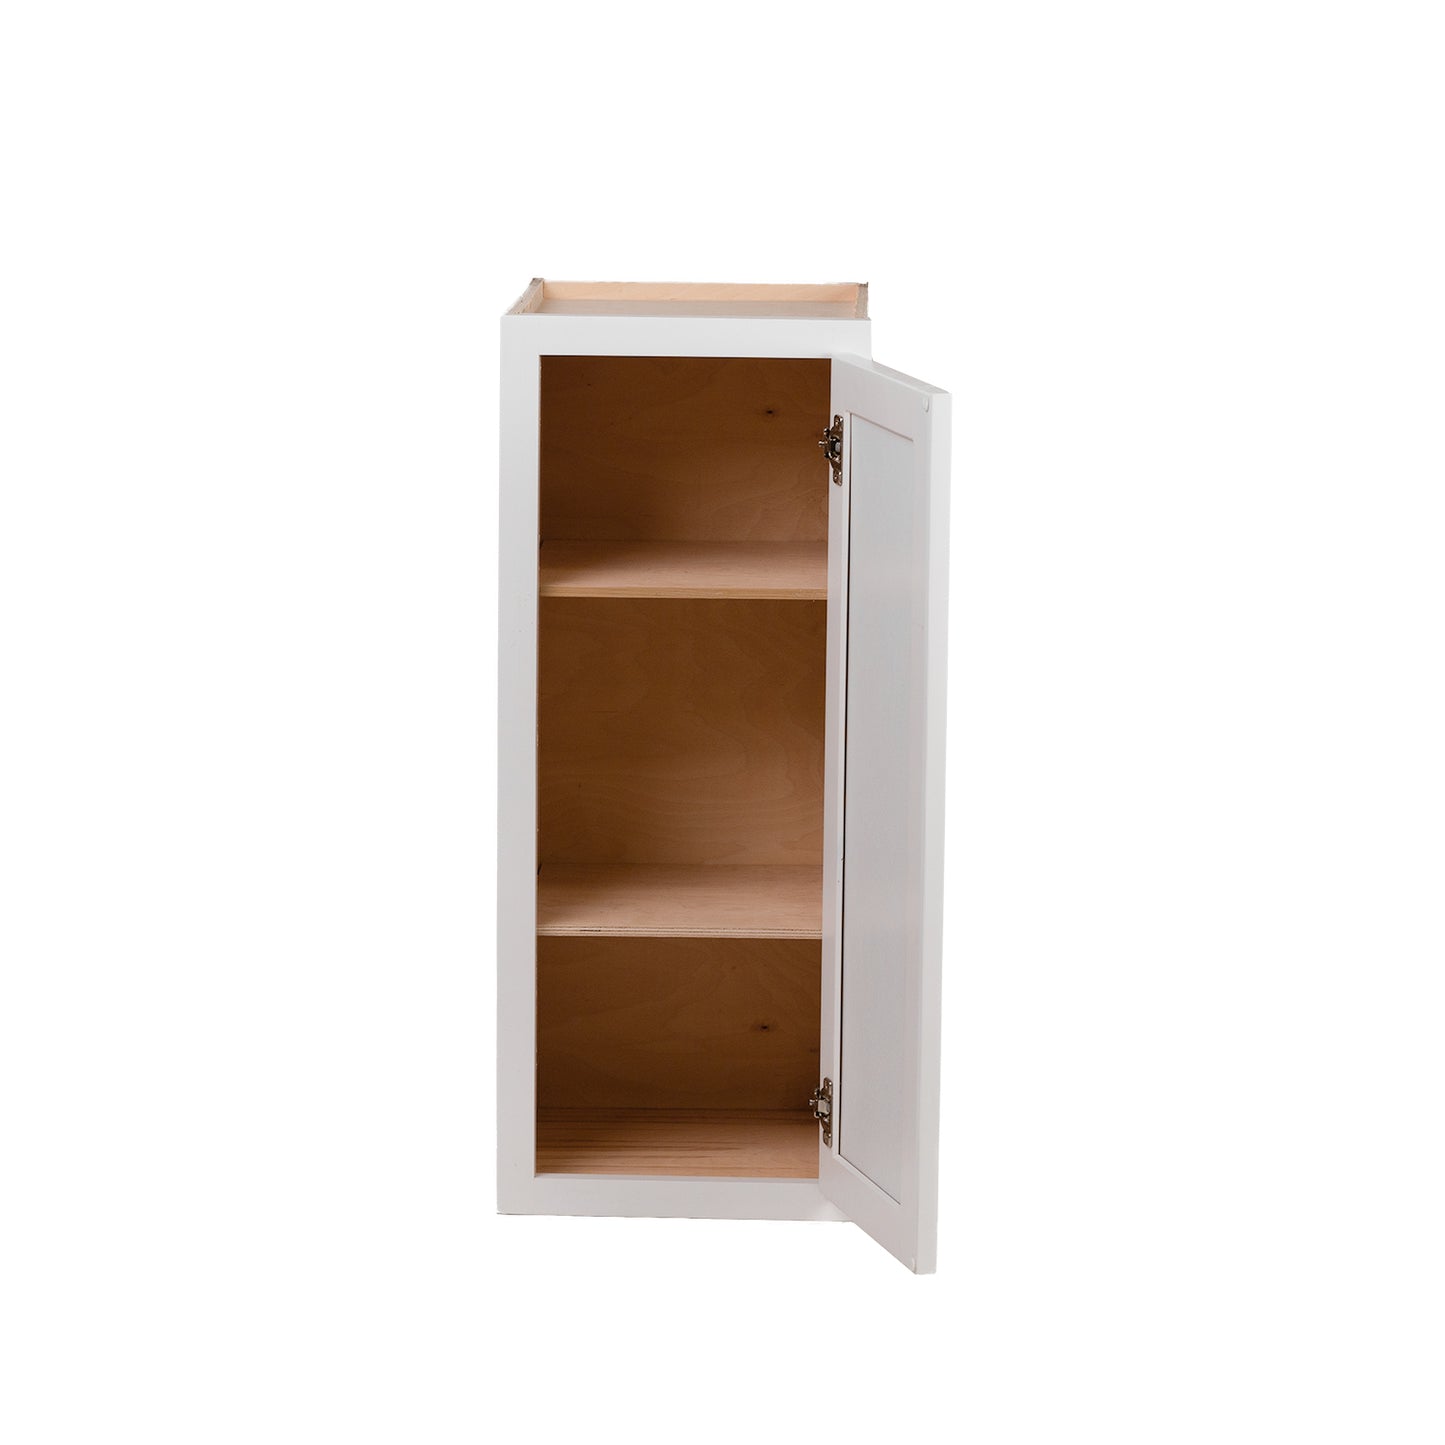 Quicklock RTA (Ready-to-Assemble) Pure White 18"Wx30"Hx12"D Wall Cabinet